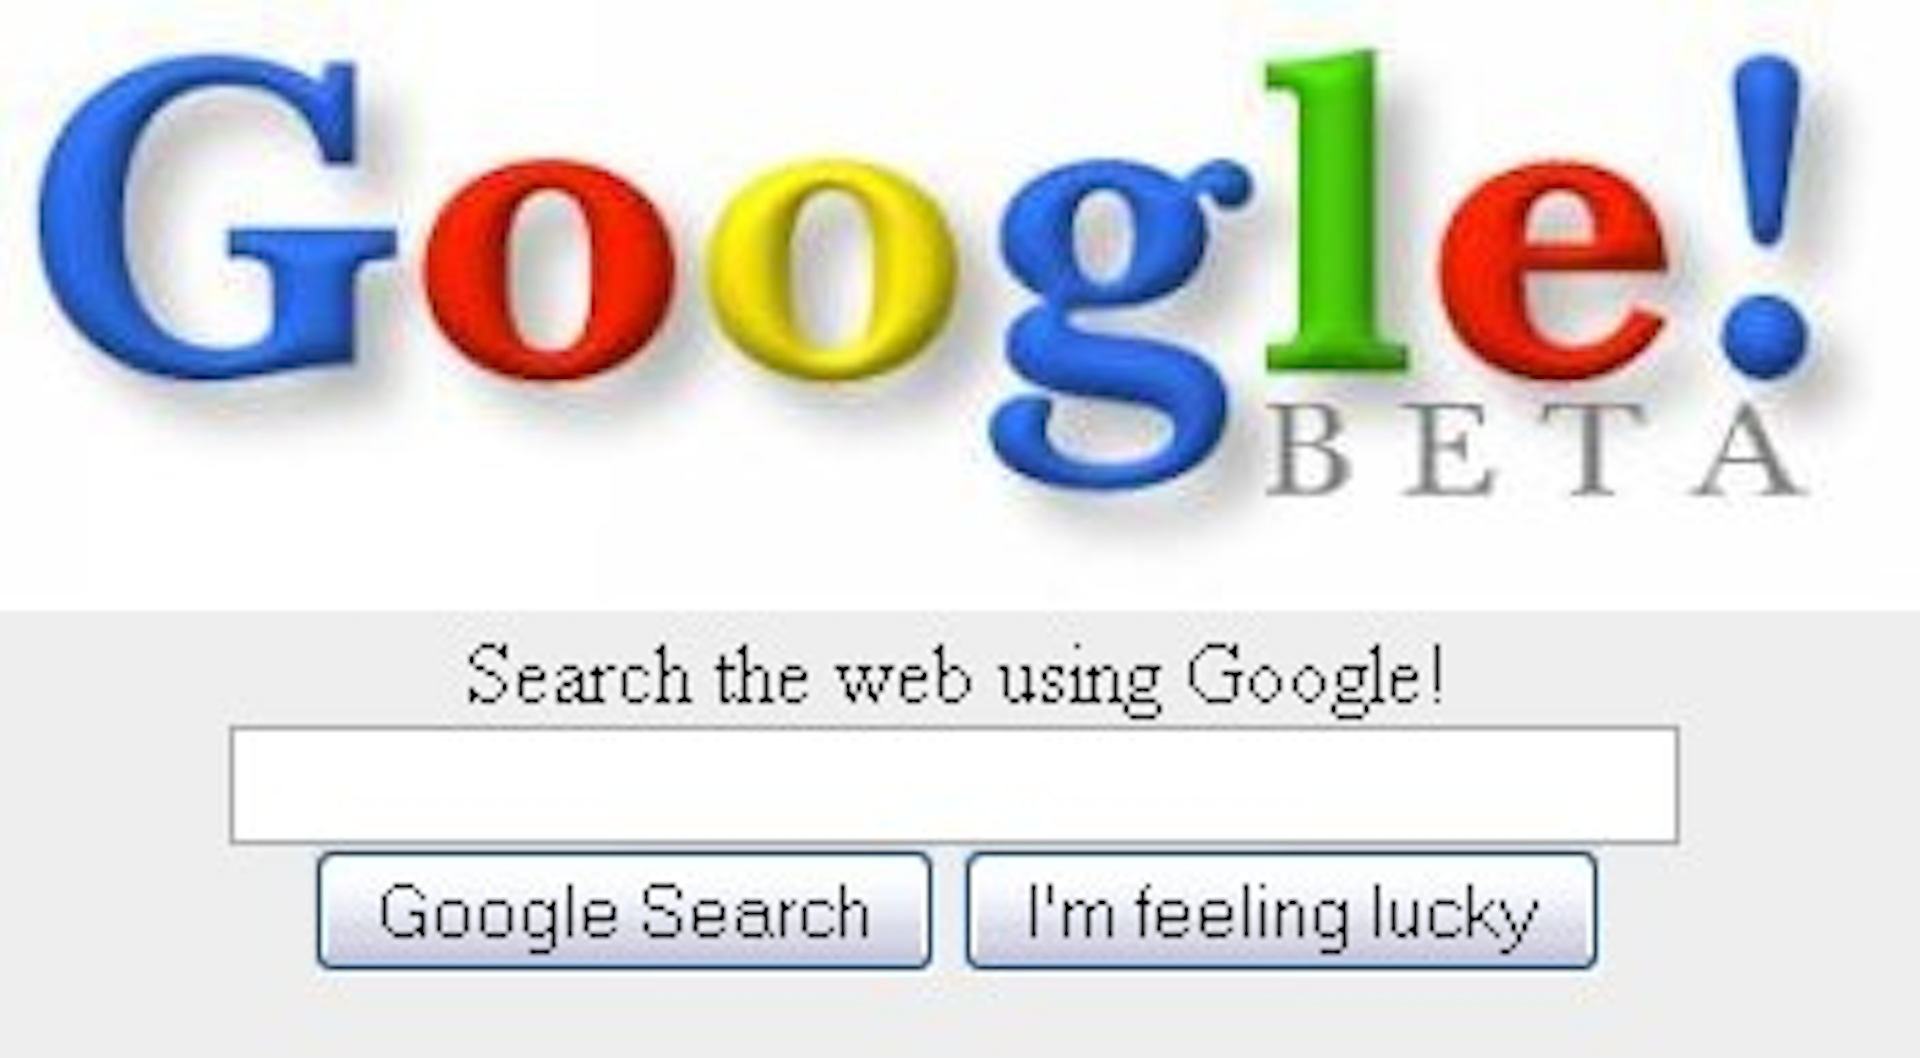 Google’s homepage in 1998